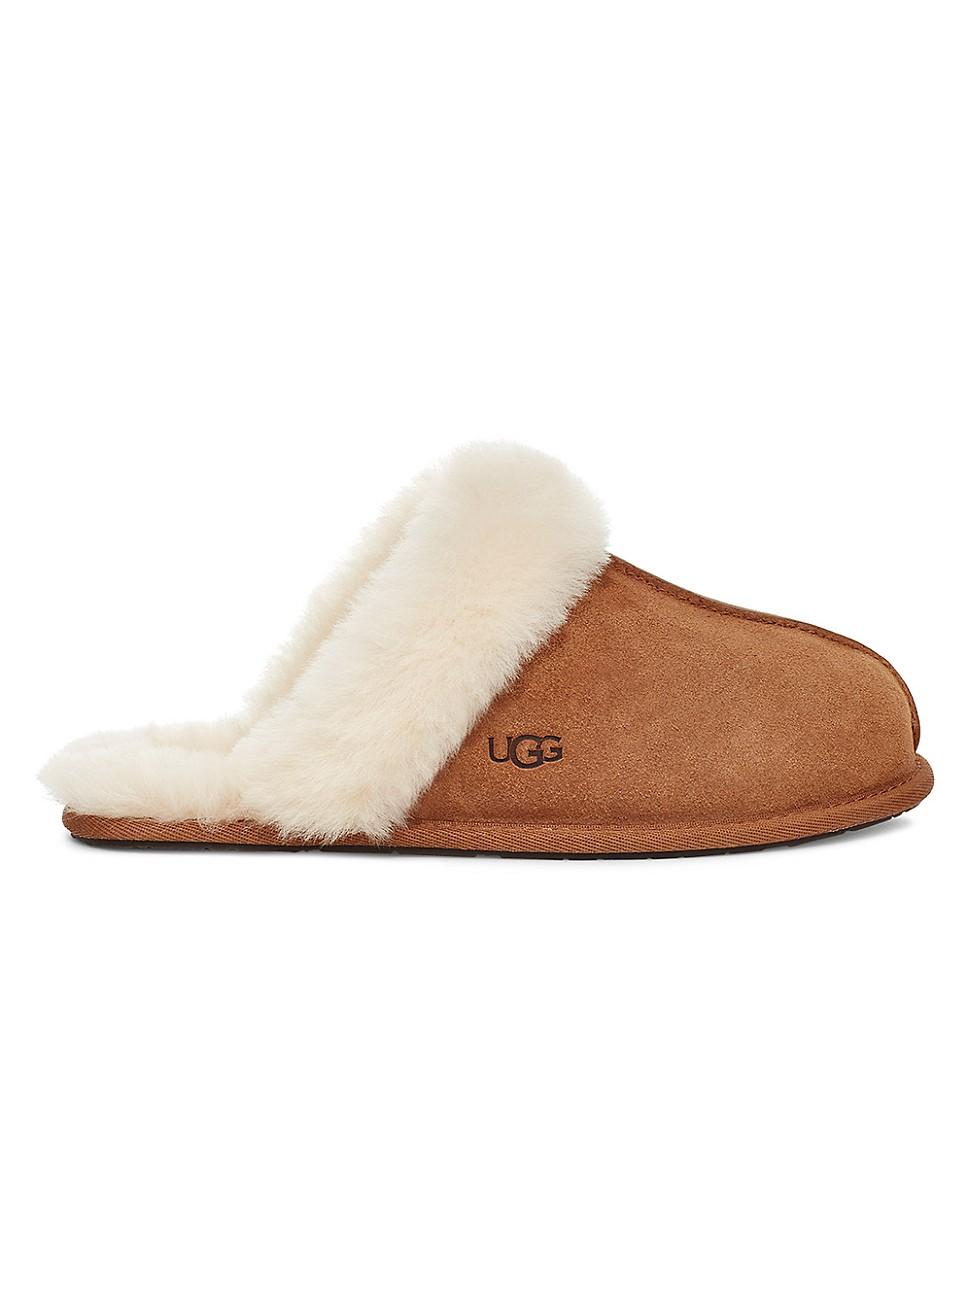 UGG Scuffette Ii Suede Sheepskin Slippers in Chestnut (Brown) - Lyst